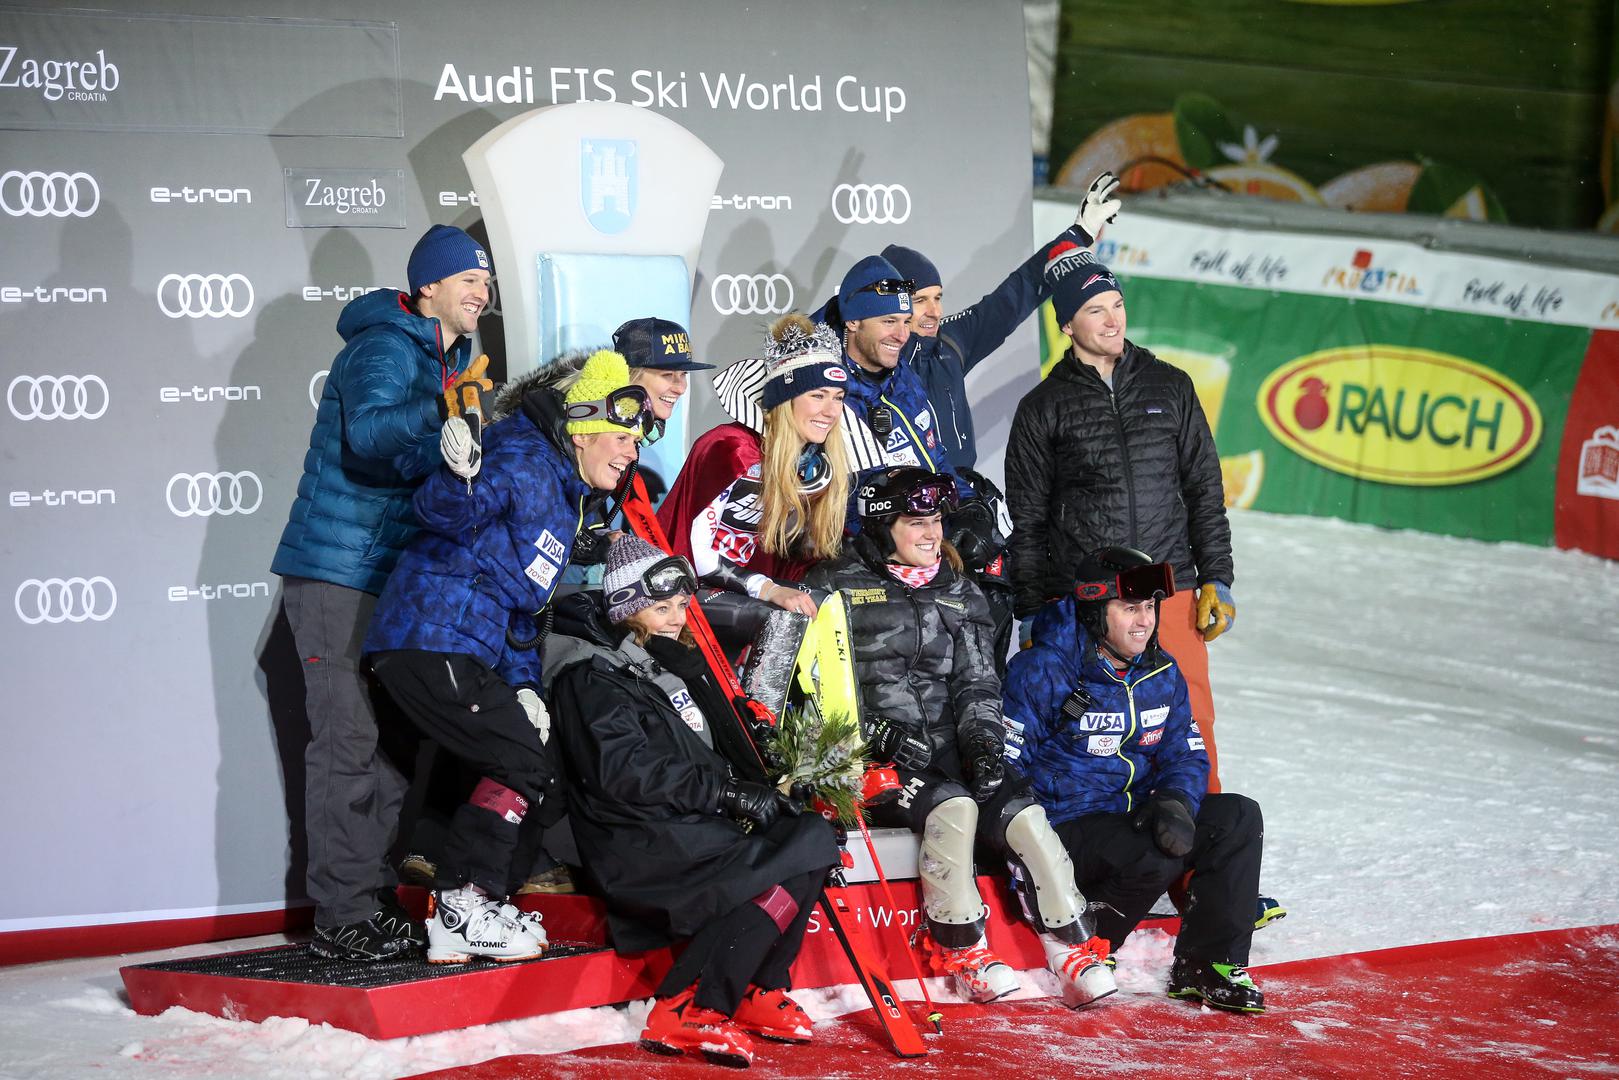 Dosadašnje pobjednice sljemenskog slaloma: 4 - Marlies Schild (Aut), Mikaela Shiffrin (SAD); 2 - Tanja Poutiainen (Fin); 1 - Veronika Velez Zuzulova (Slk), Sandrine Aubert (Fra), Maria Riesch (Njem)